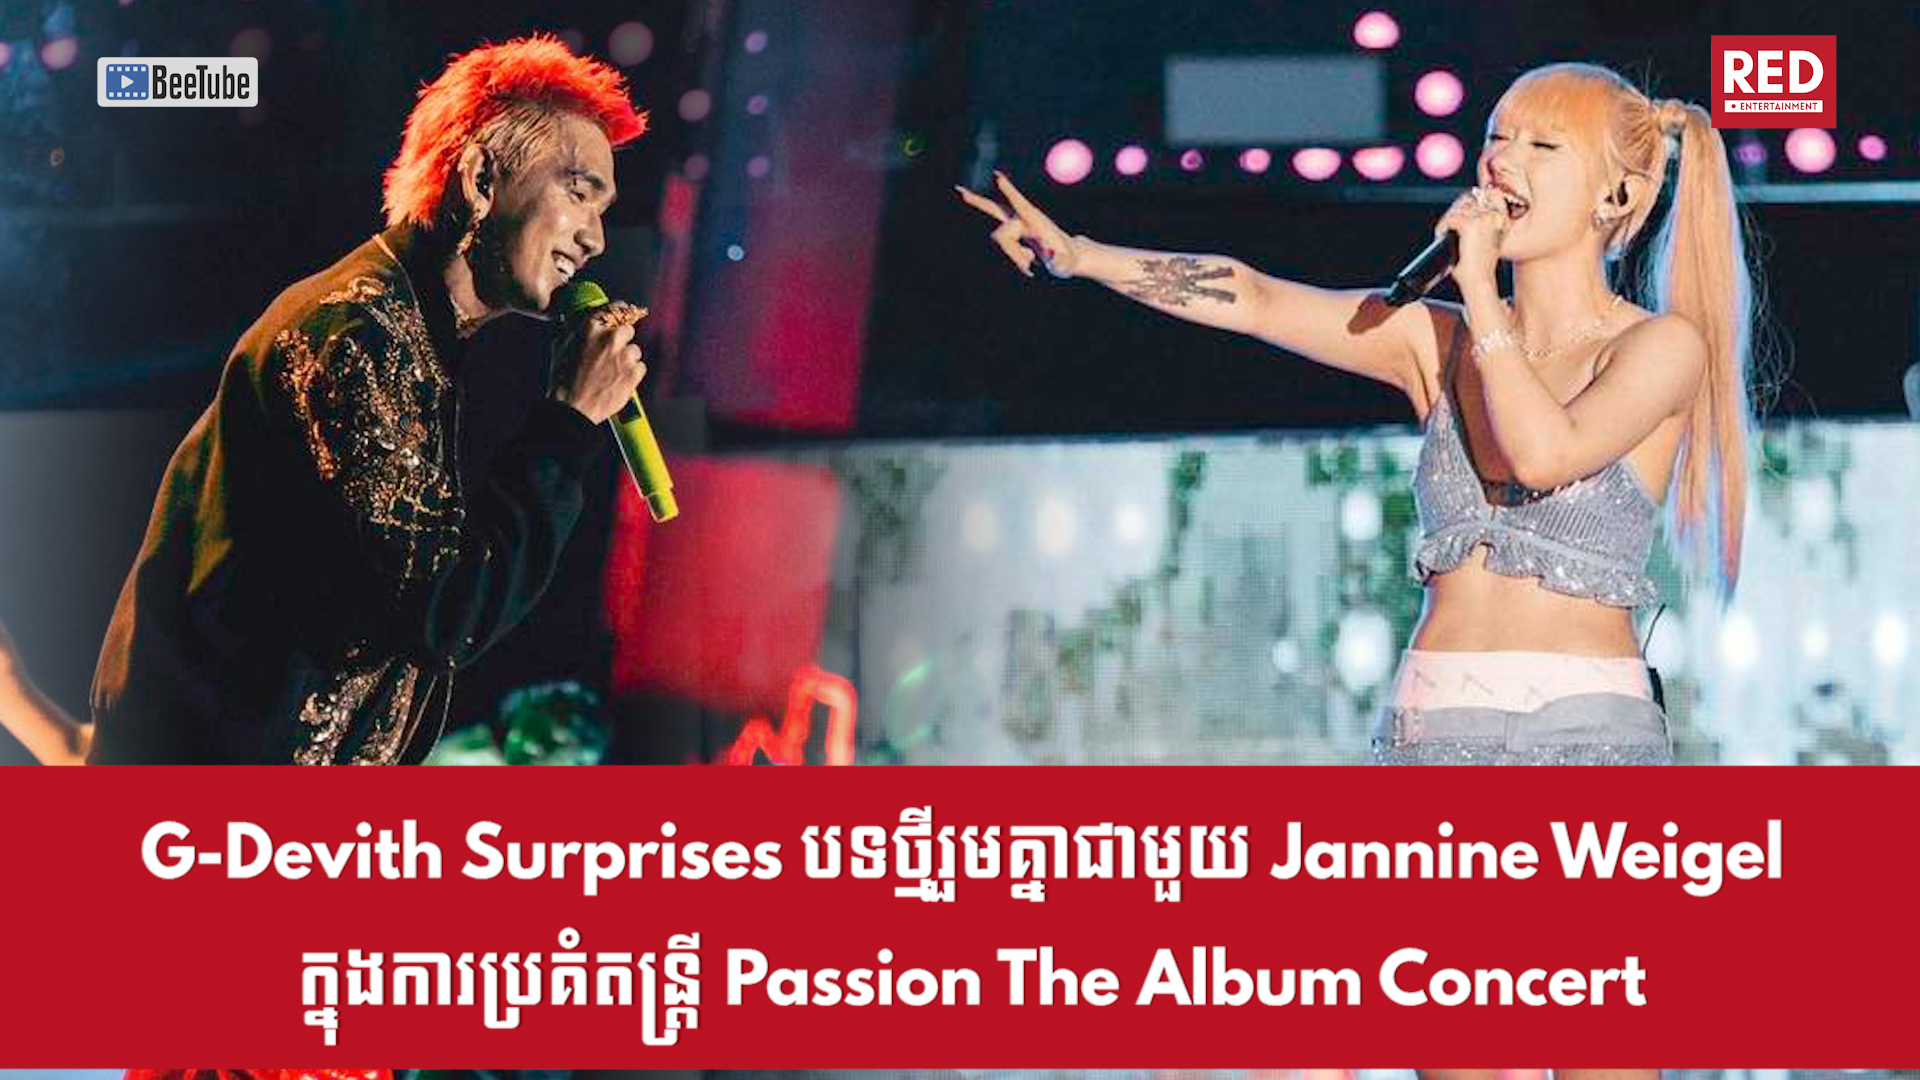 G-Devith Surprises បទចម្រៀងថ្មីរួមគ្នាជាមួយ Jannine Weigel នៅក្នុងការប្រគំតន្រ្តី Passion The Album Concert